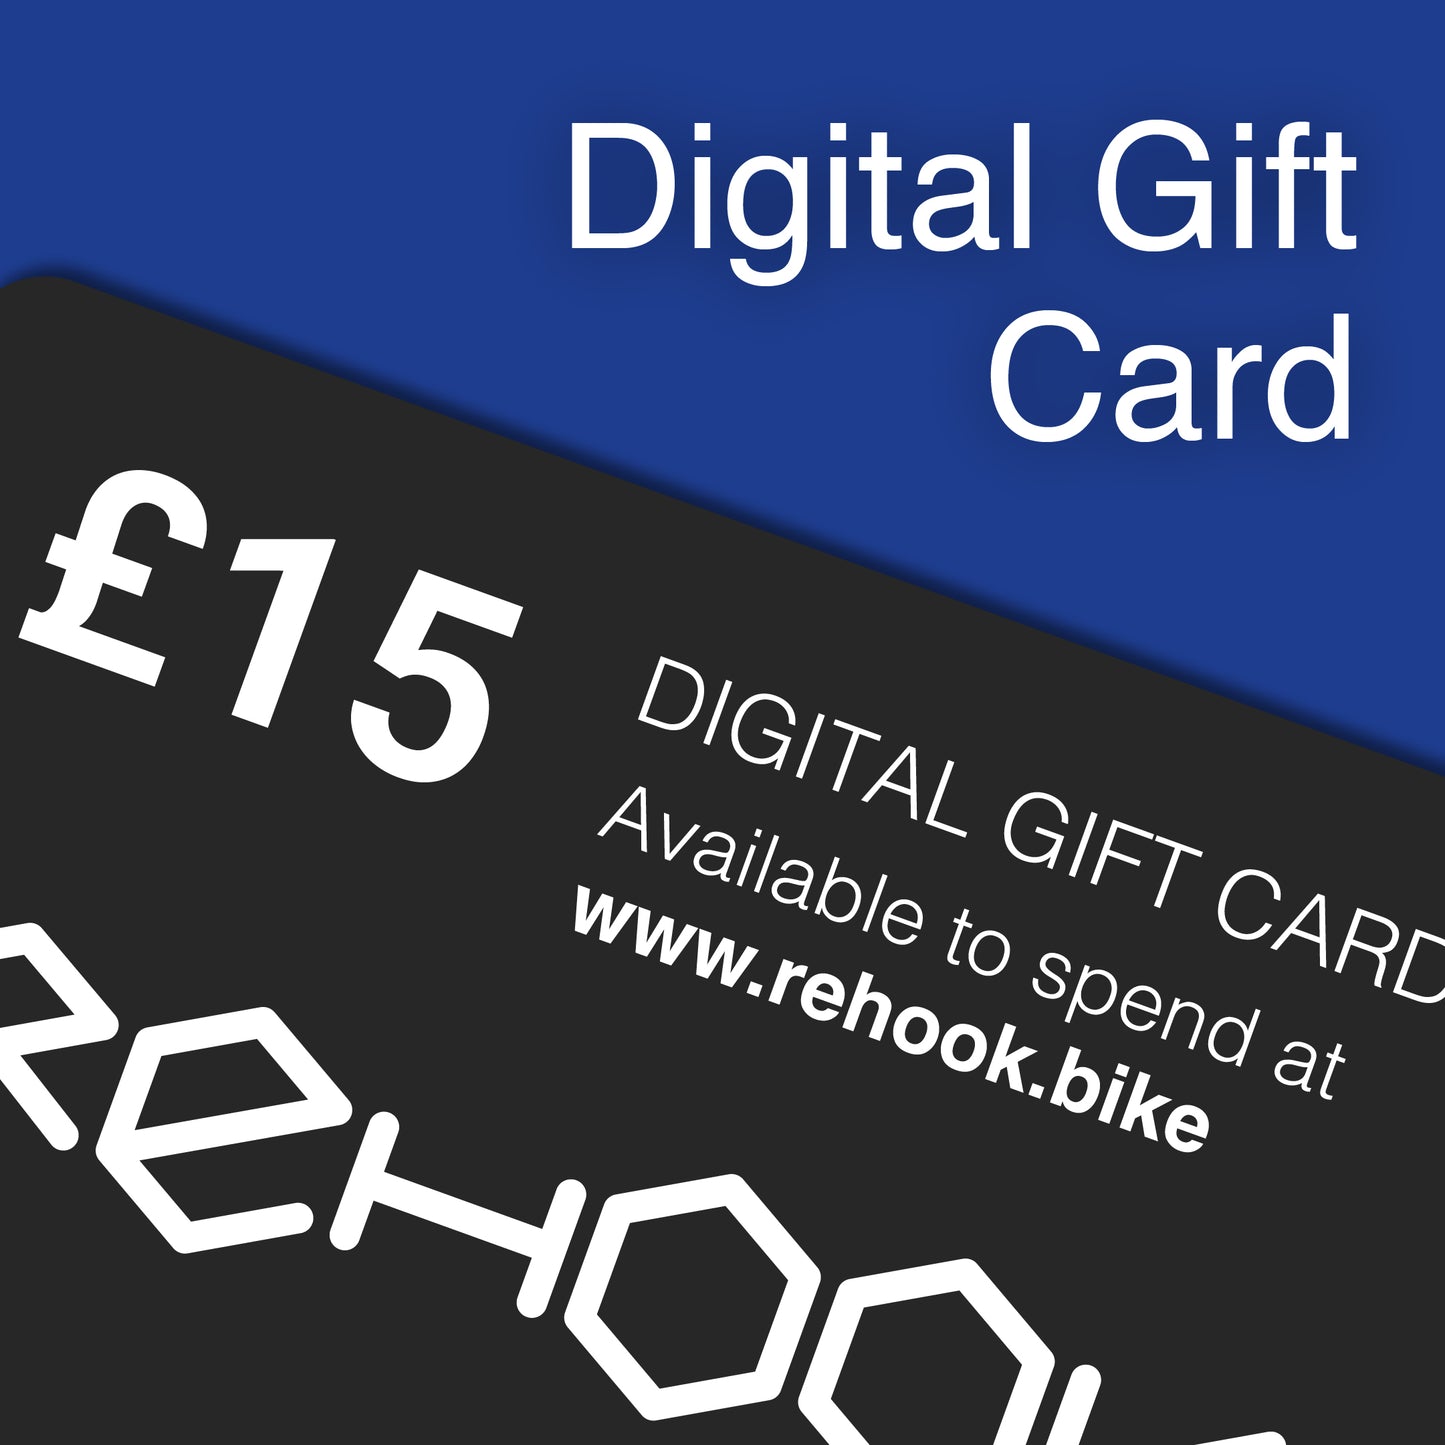 Rehook E-Gift Card